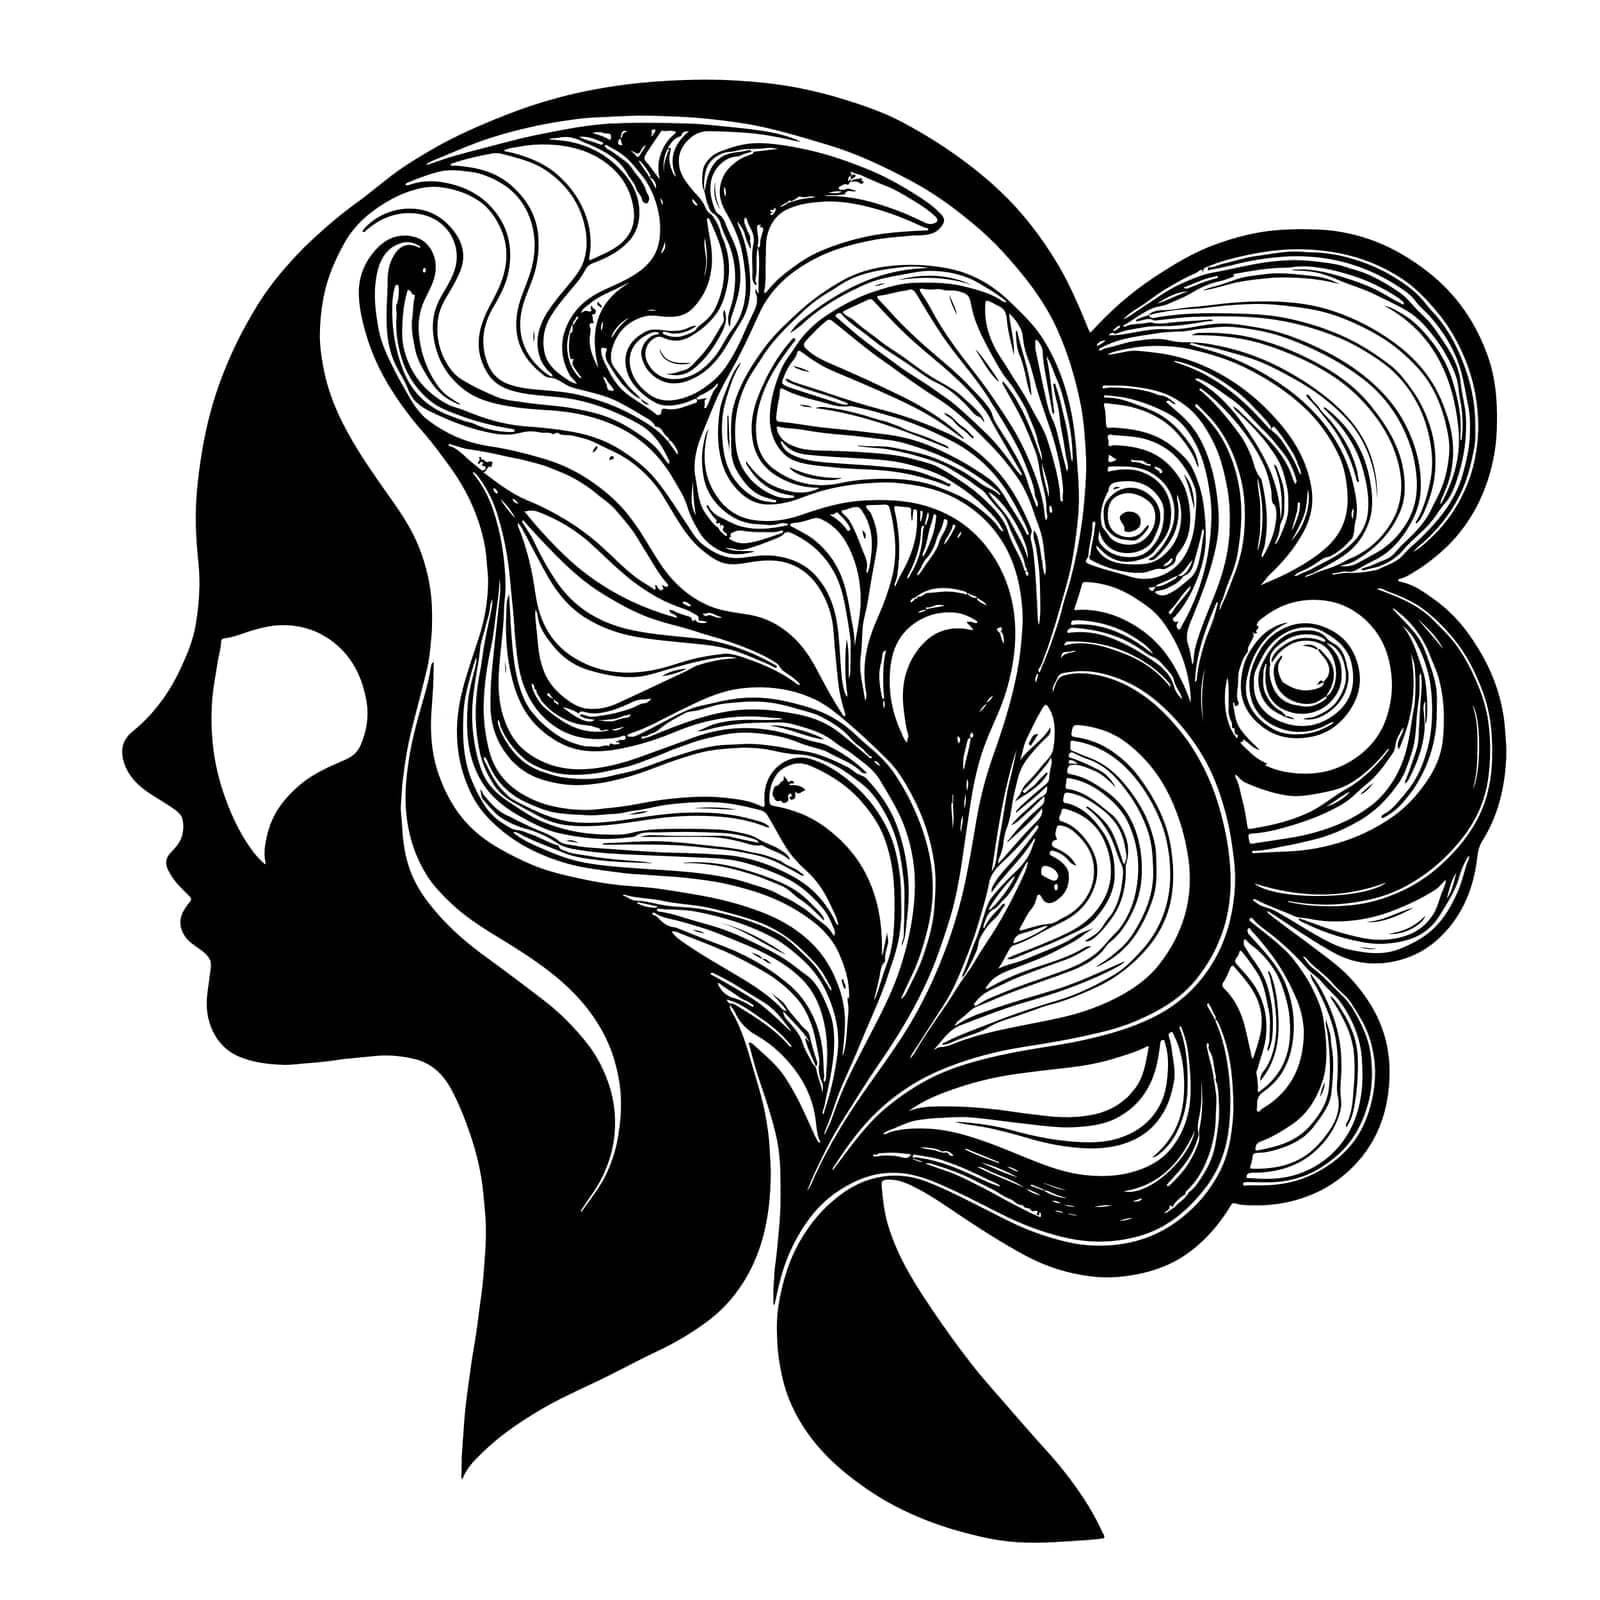 Sketch of Female profile silhouette. Art hairstyle black and white design. by EkaterinaPereslavtseva